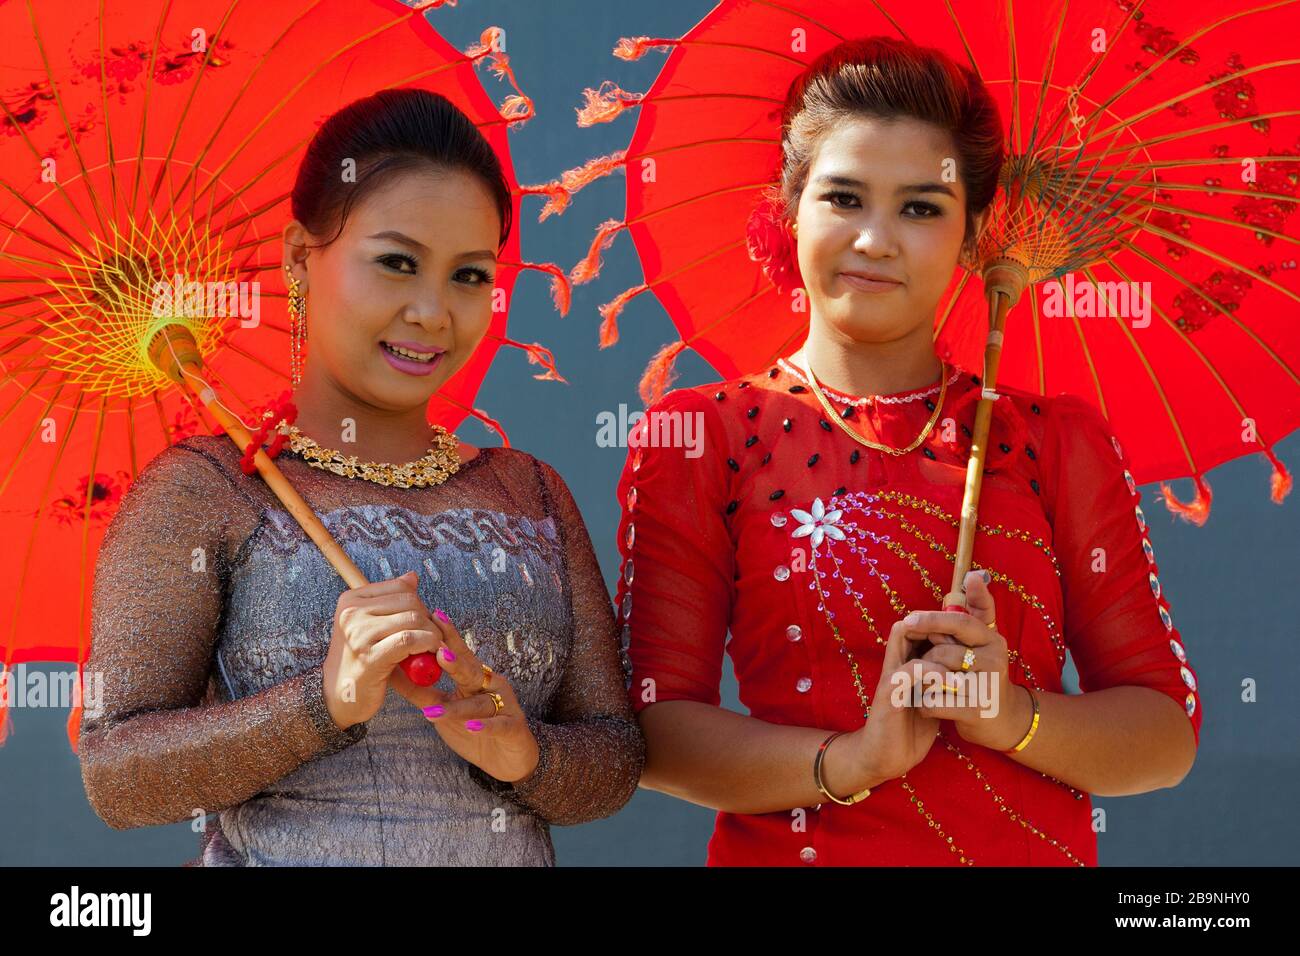 https://c8.alamy.com/compes/2b9nhy0/mujeres-con-vestimenta-tradicional-yangon-rangun-myanmar-birmania-asia-2b9nhy0.jpg